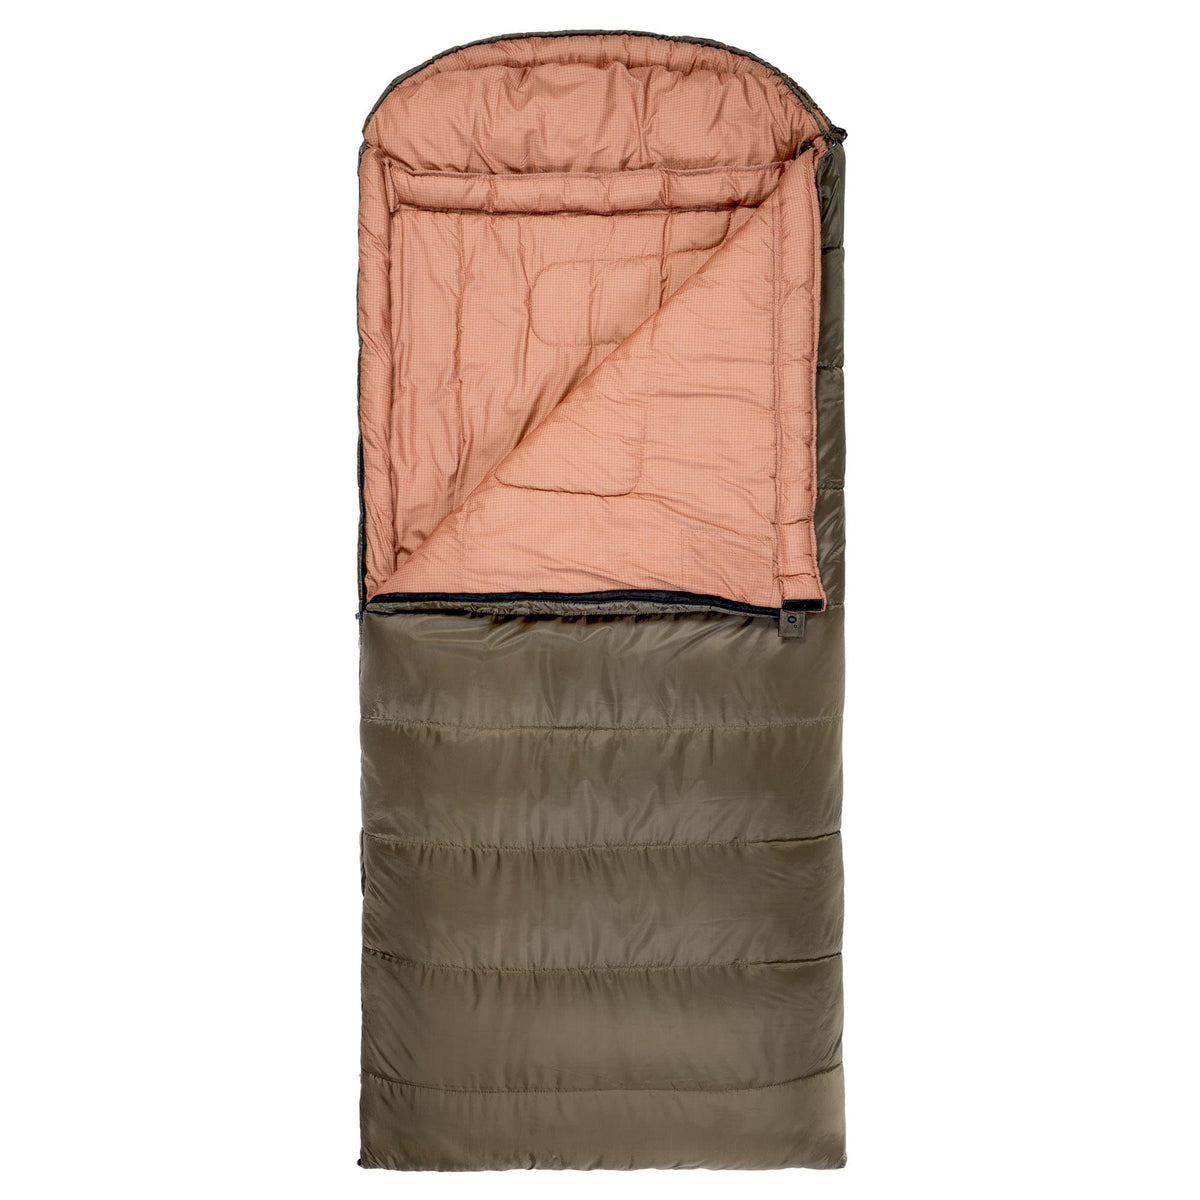 TETON Sports Celsius XXL 0˚F Sleeping Bag Right Zipper / Green & Tan 100R